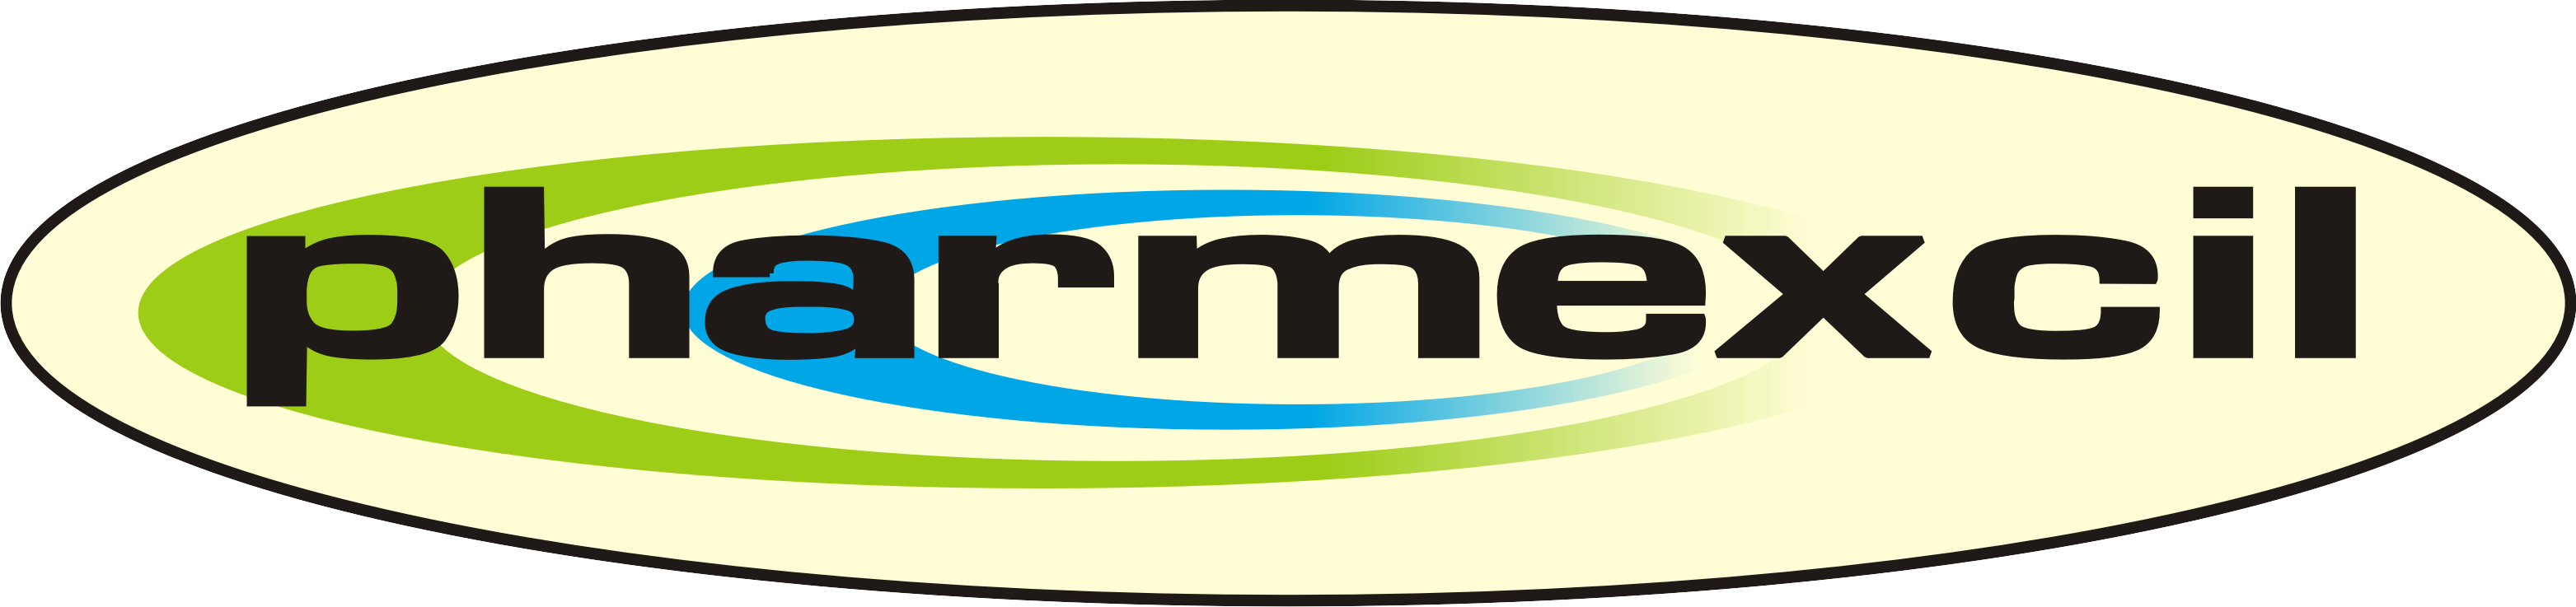 Pharmexcil Logo